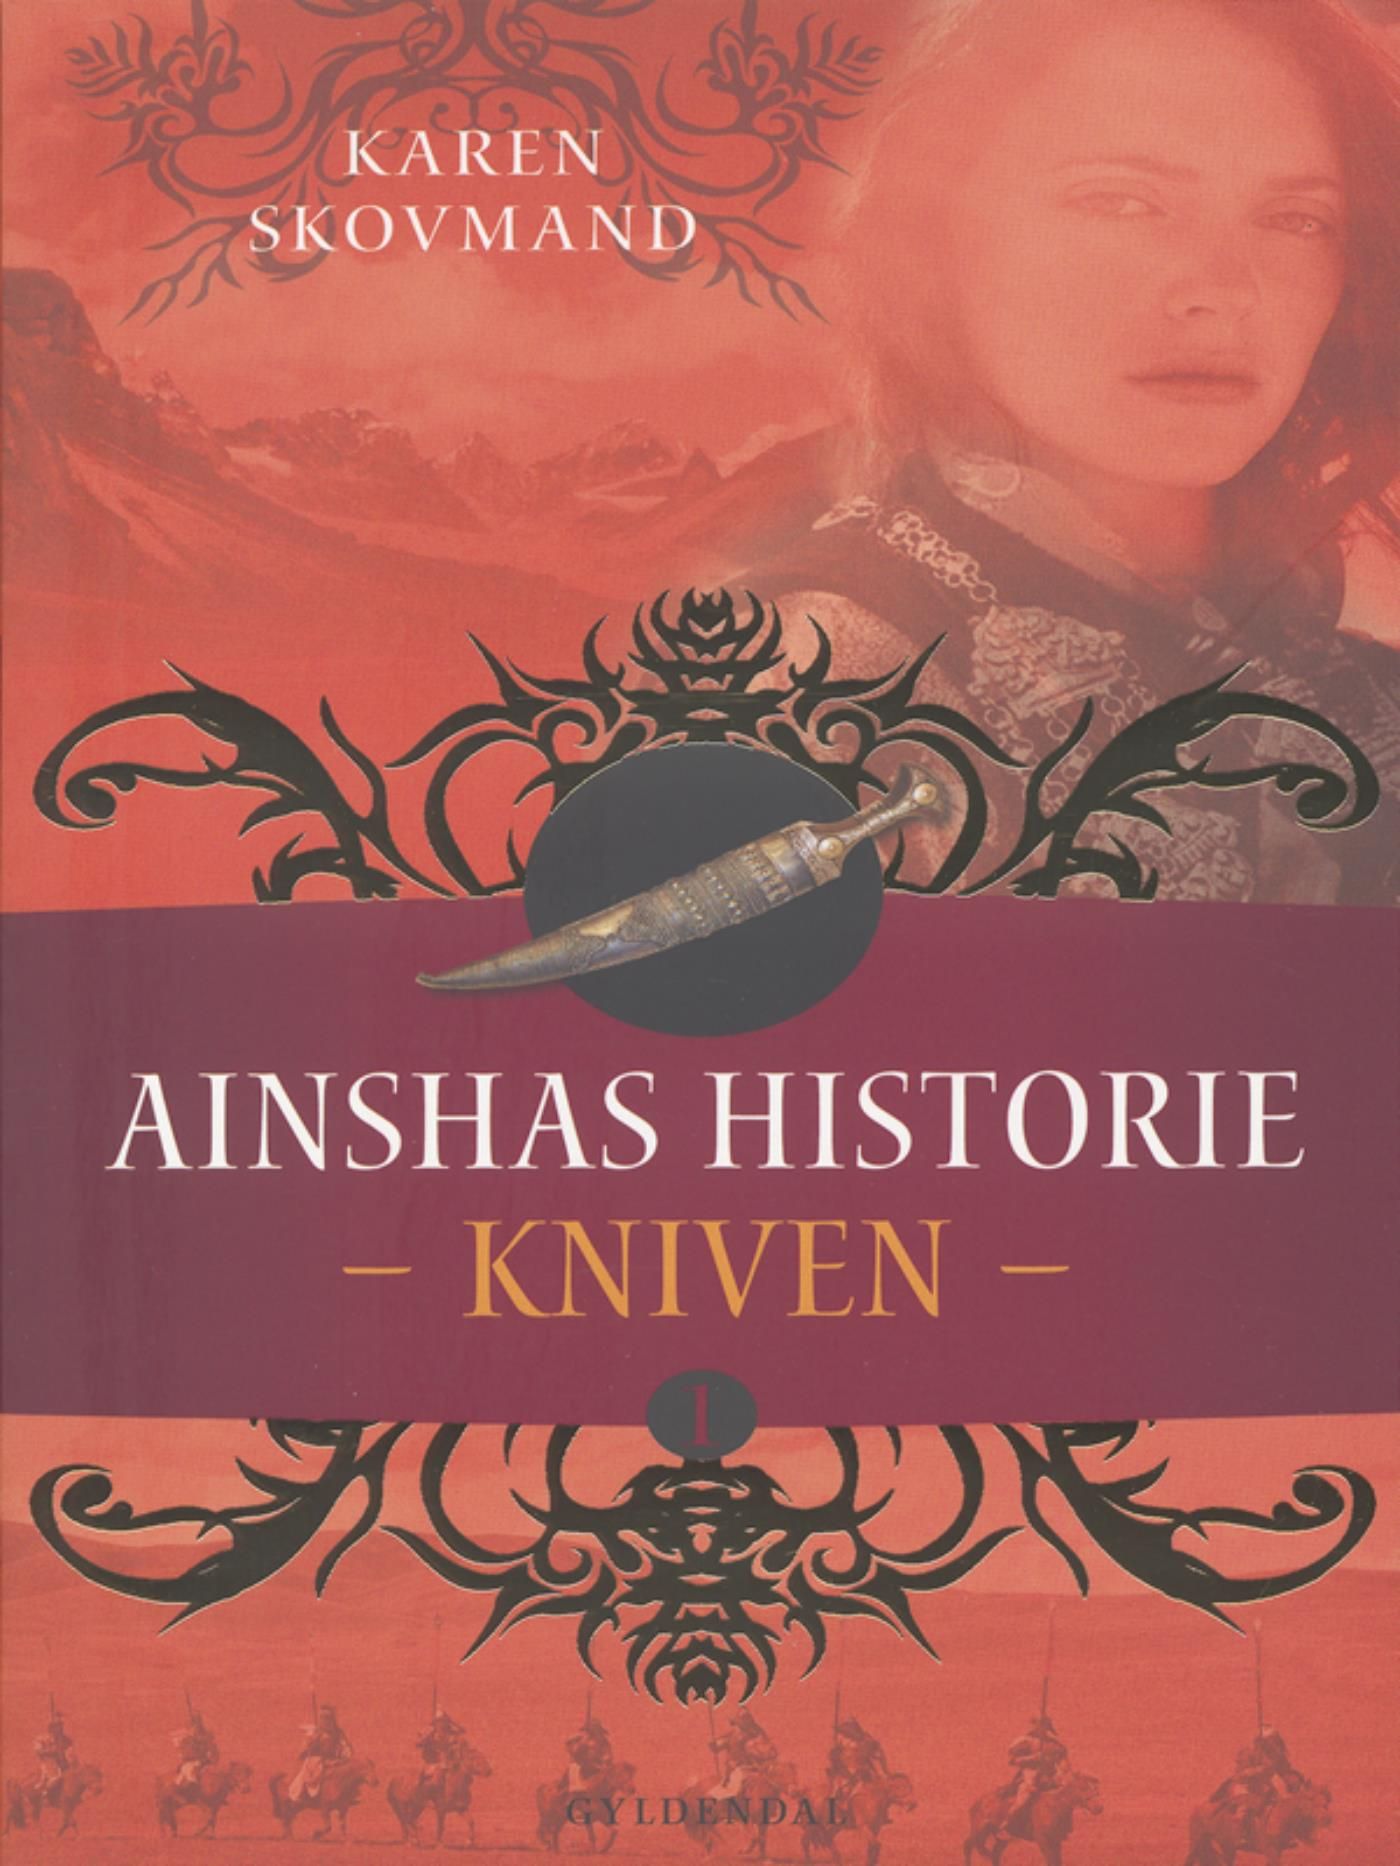 Ainshas historie 1 - Kniven, eBook by Karen Skovmand Jensen